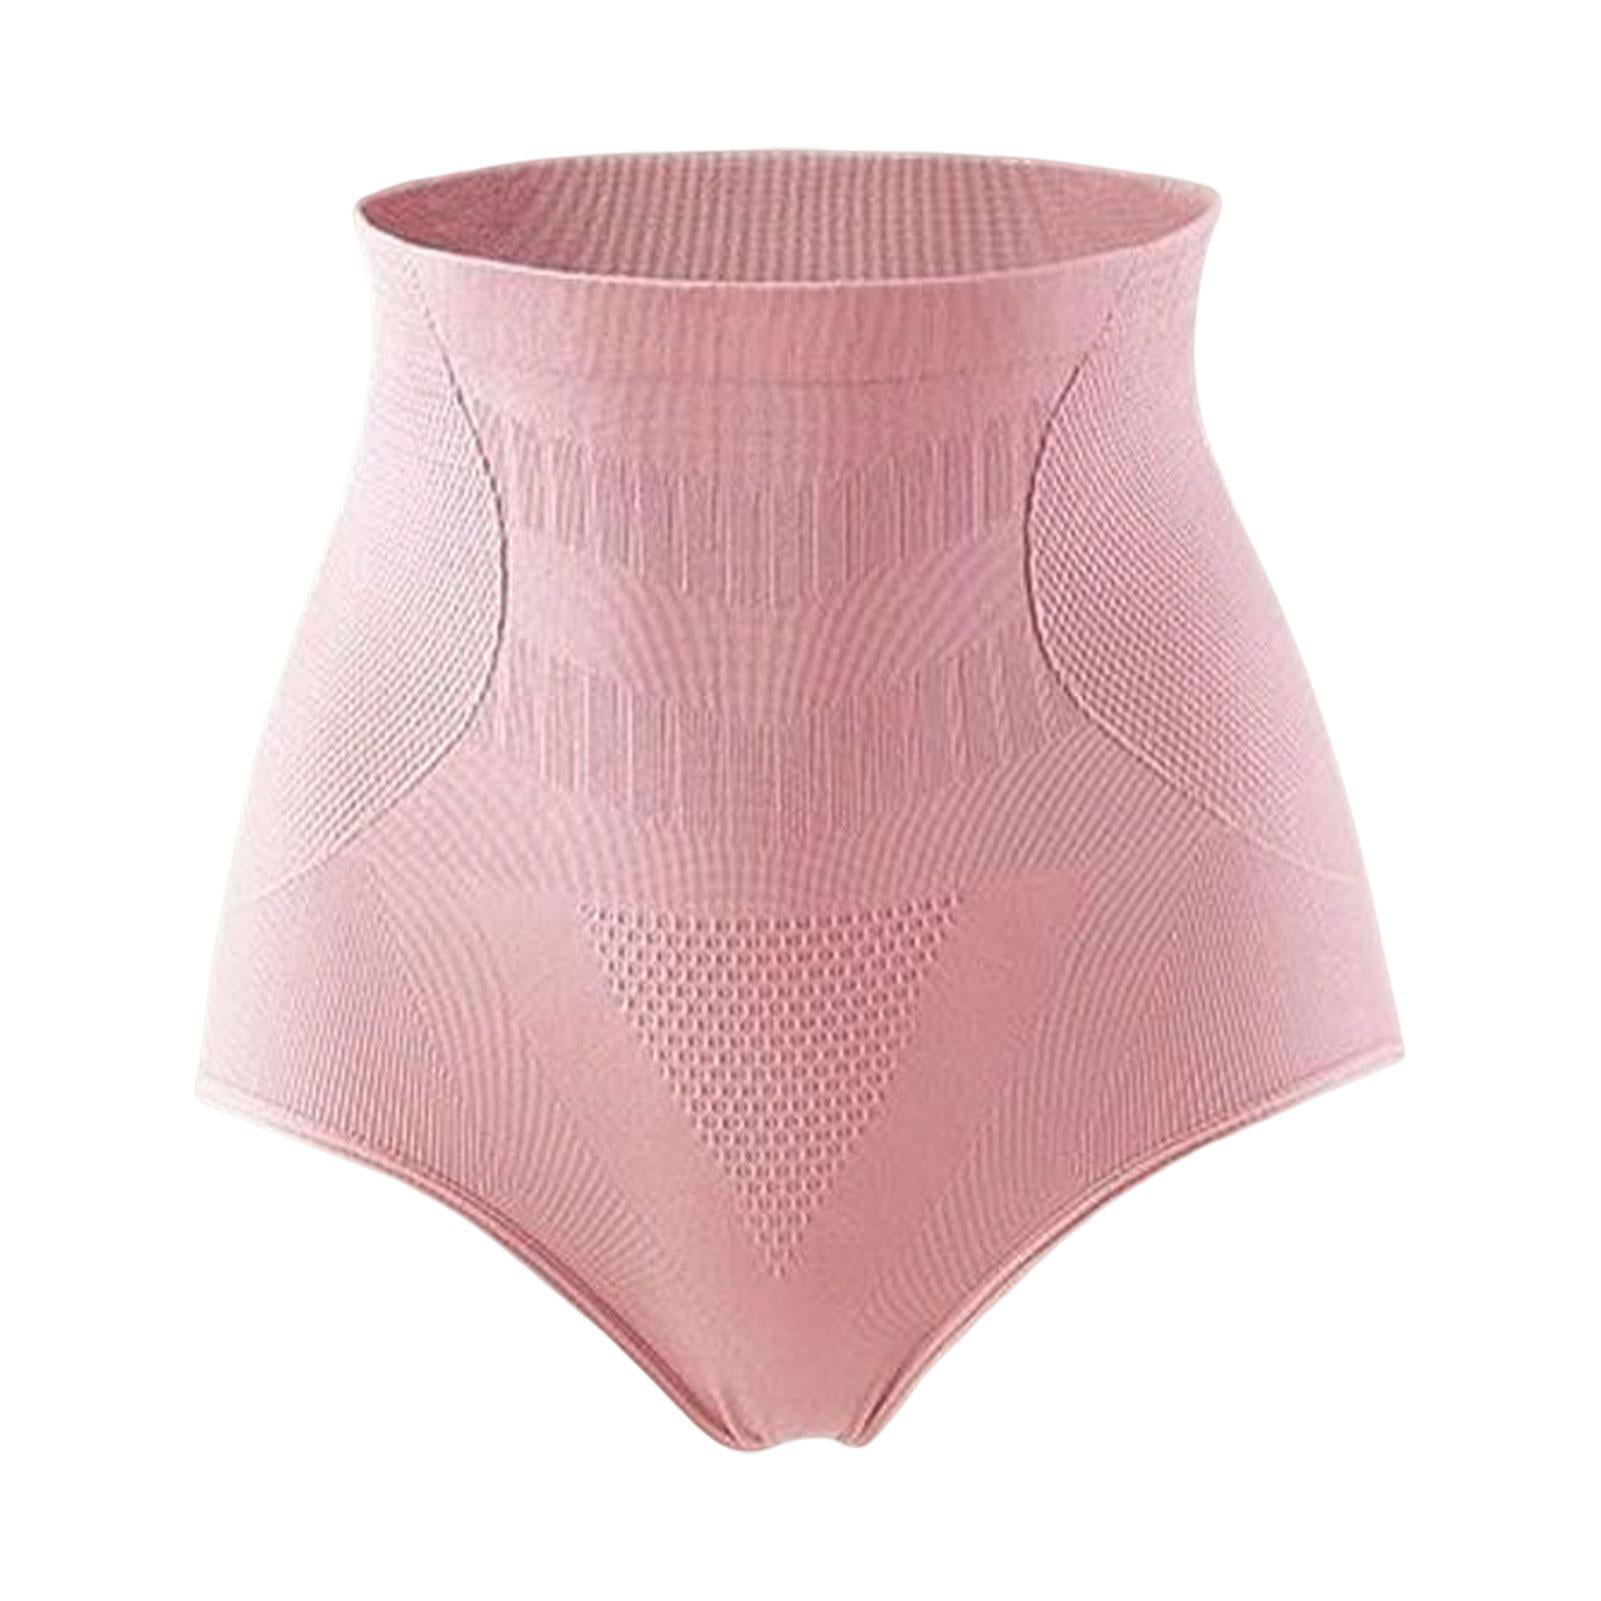 Topaty Shapewear Underwear | Graphene Honeycomb Vaginal Tightening and ...